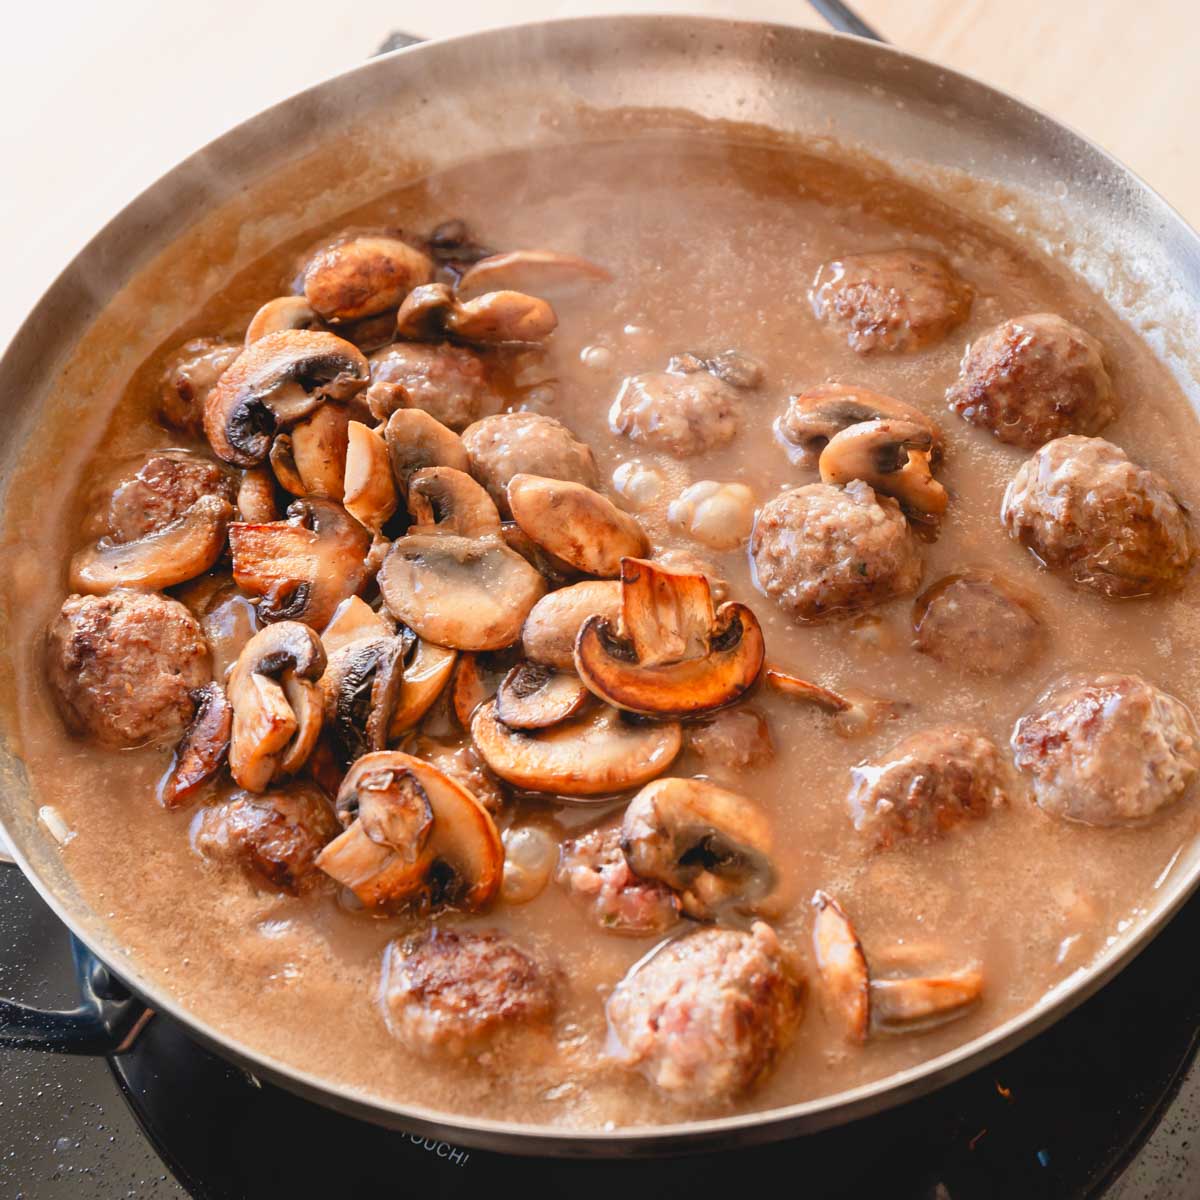 A pan full of mushrooms, meatballs, and gravy.